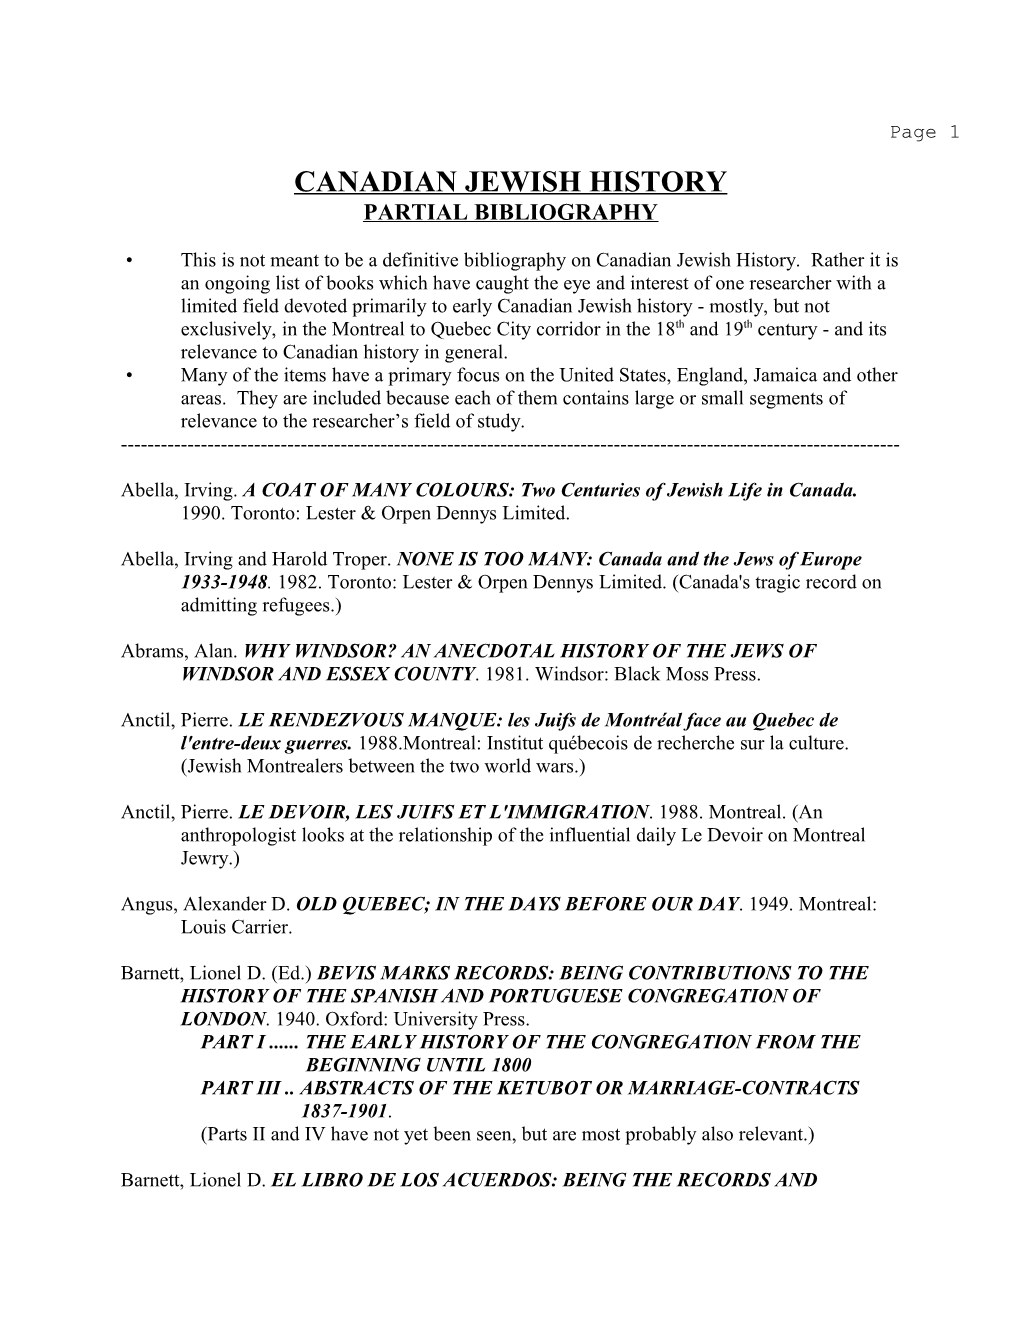 Canadian Jewish History